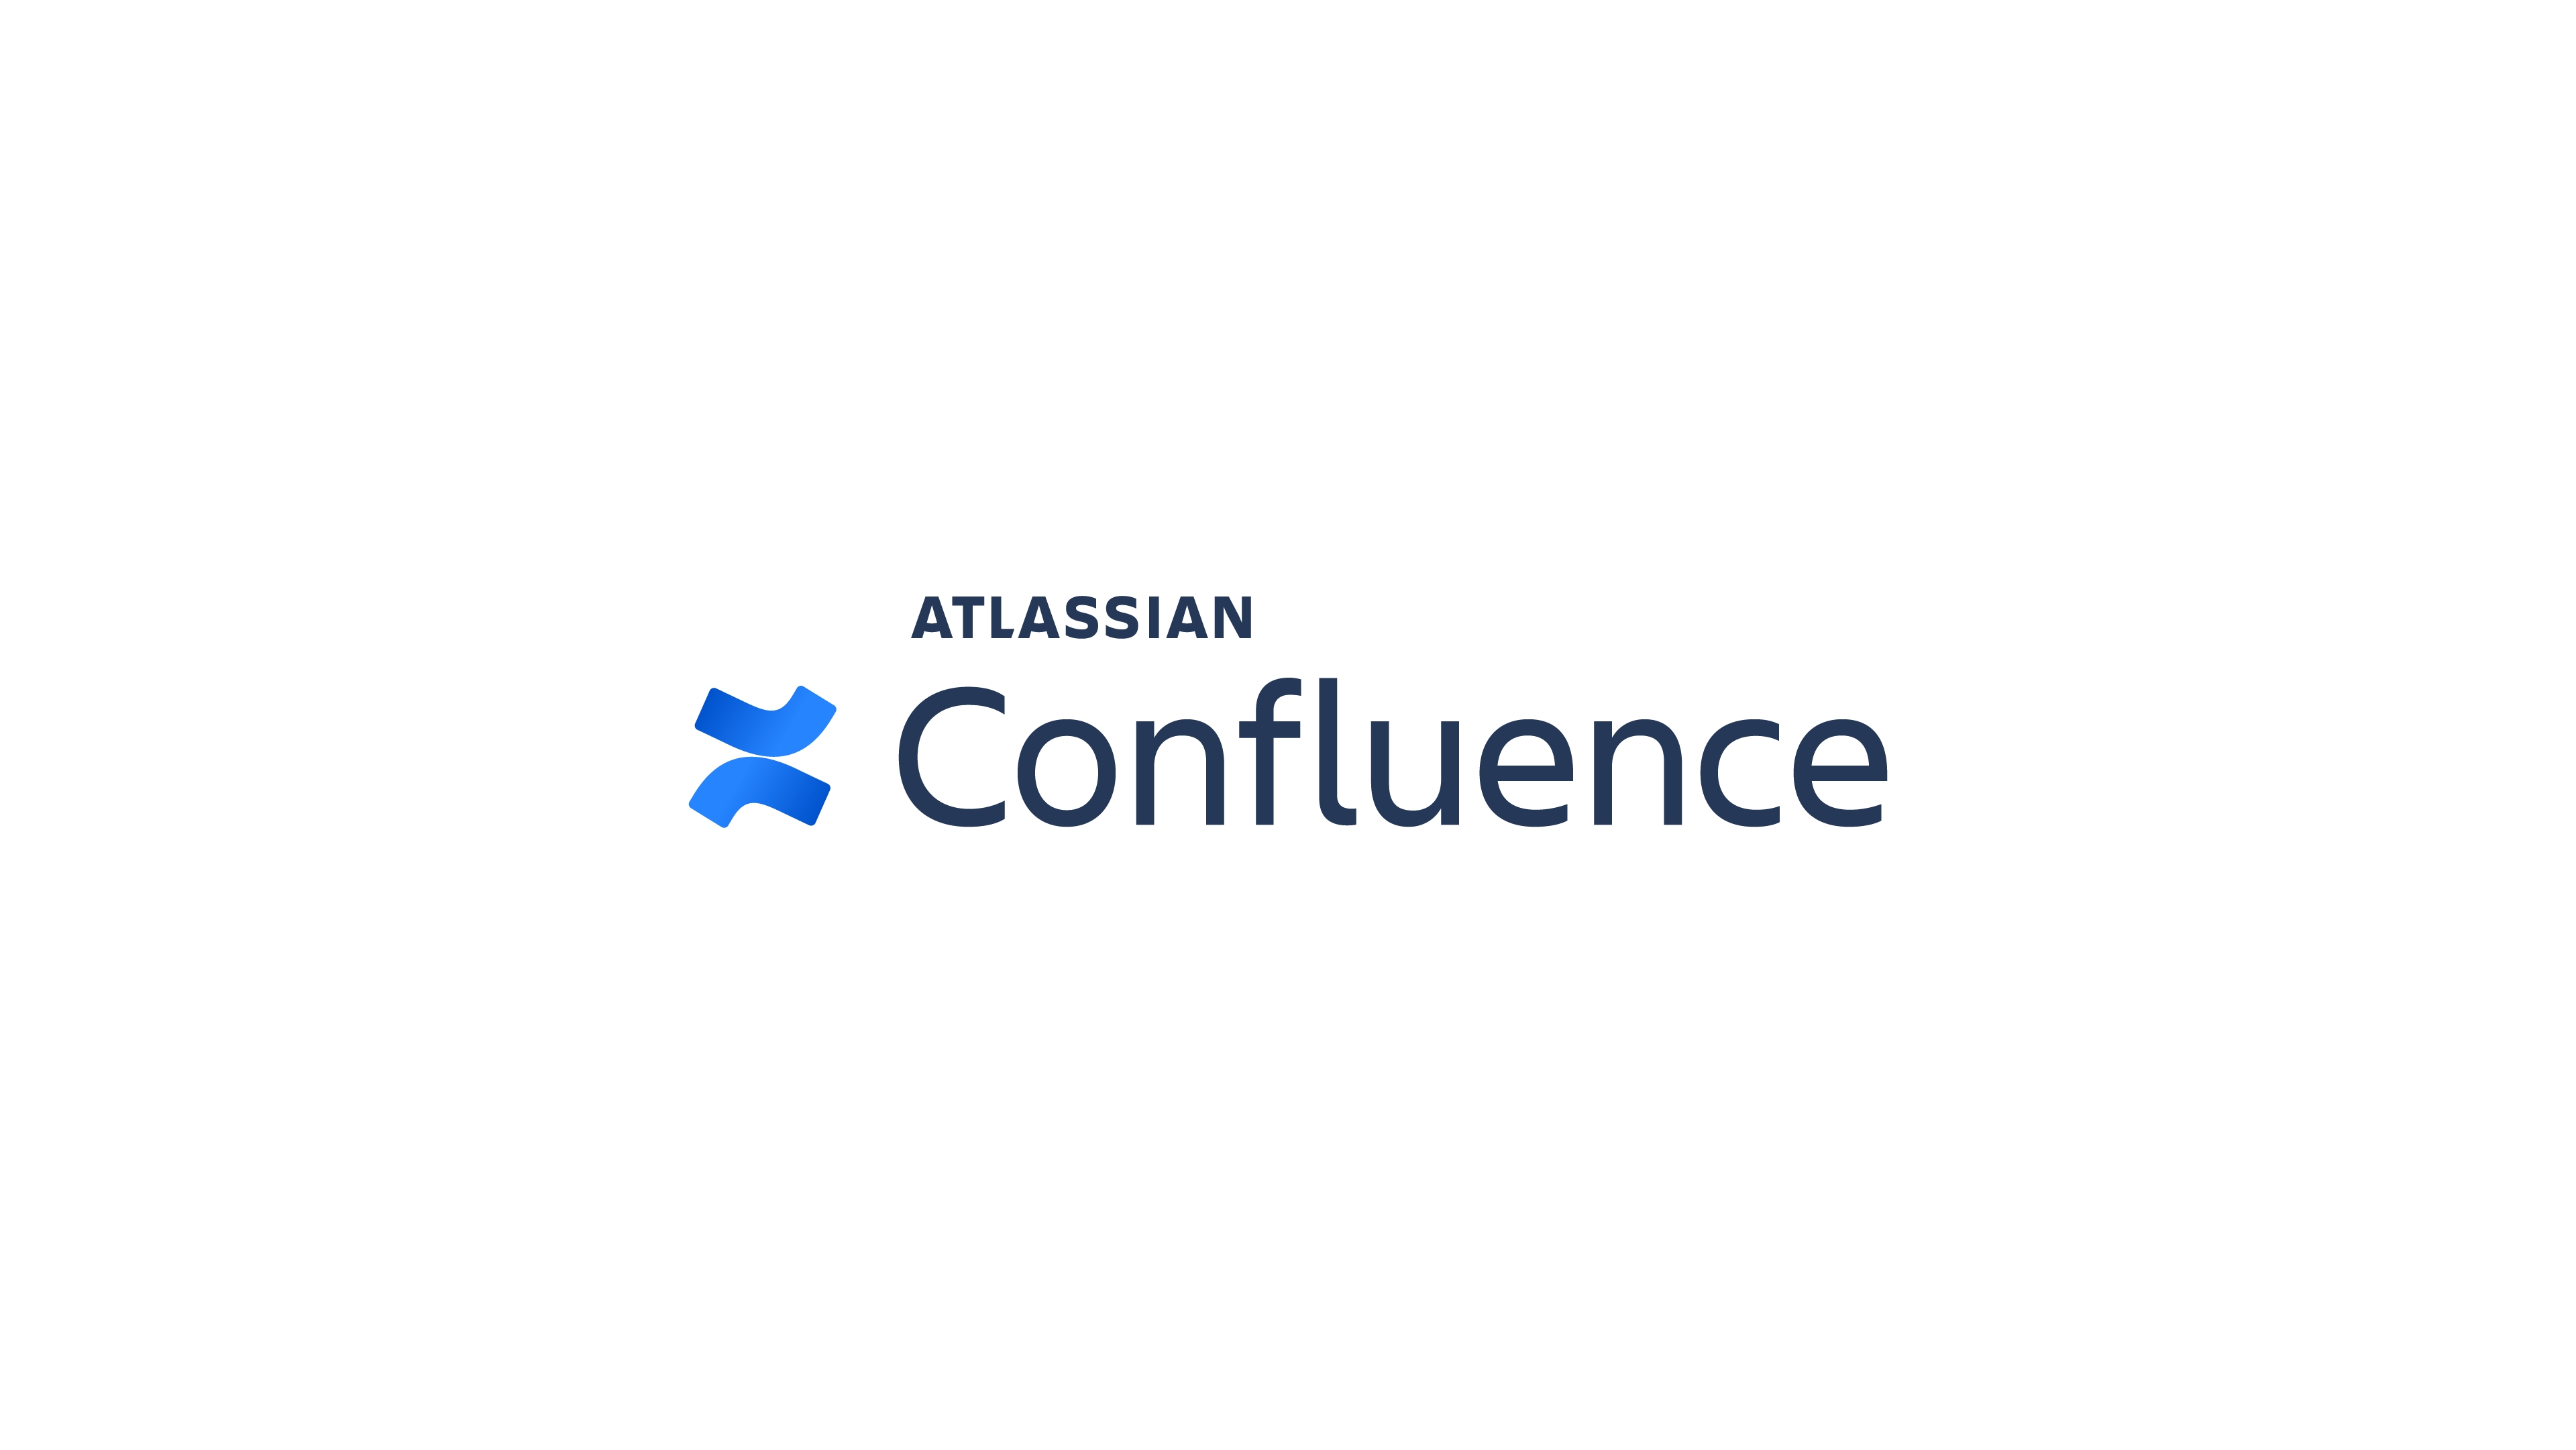 Confluence Logo - Logos - Atlassian Design